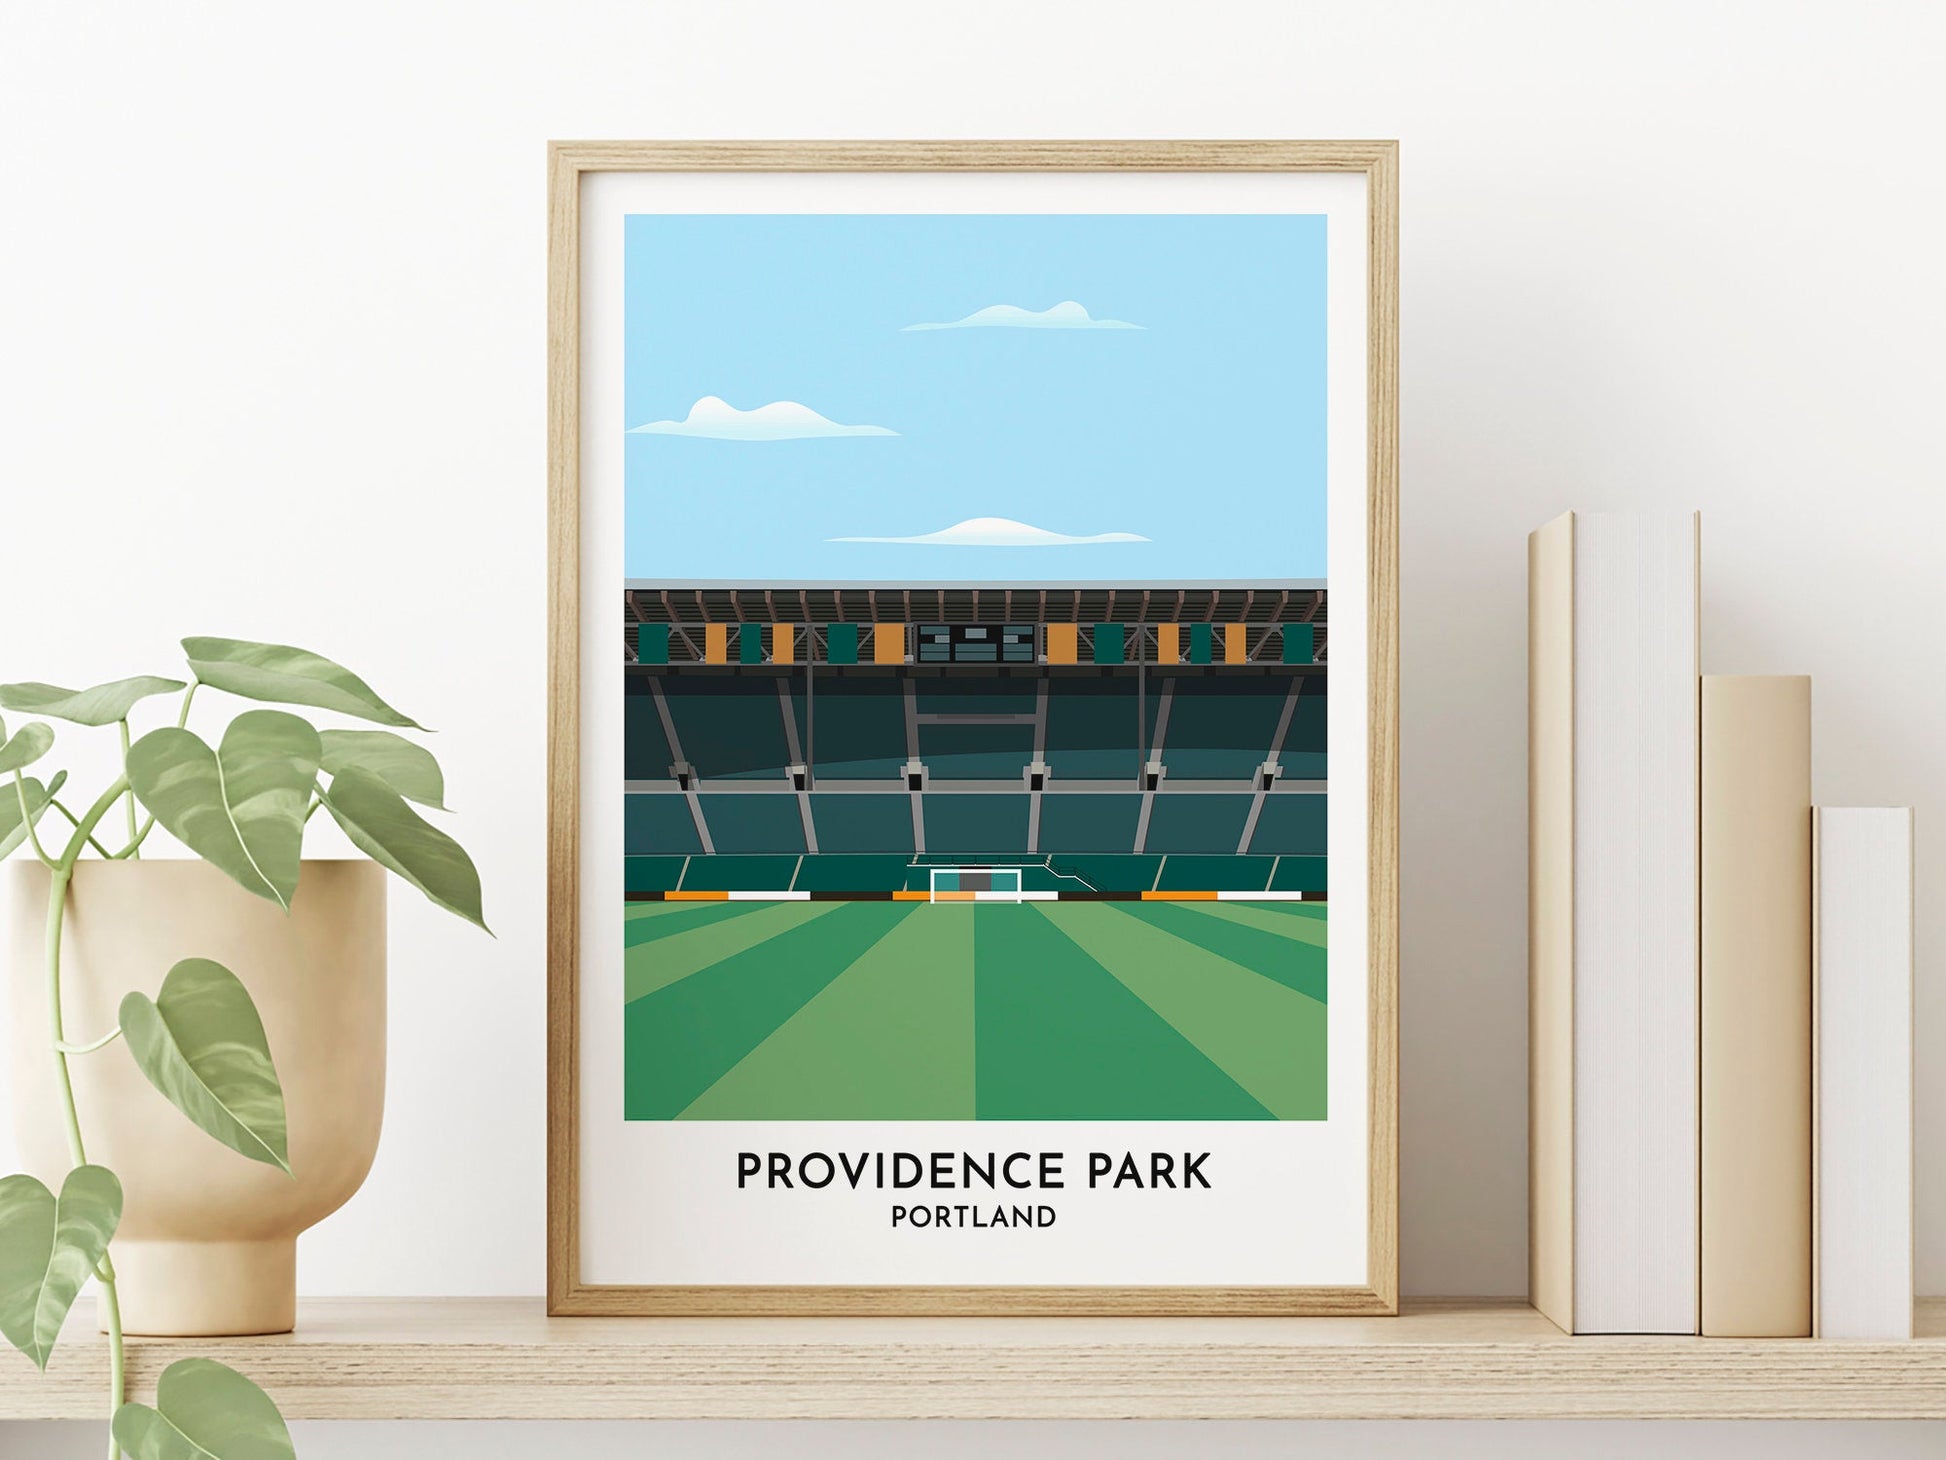 Portland Soccer Team Stadium Print, Providence Park Graphic Illustration, Present for Soccer Fans in US - Turf Football Art